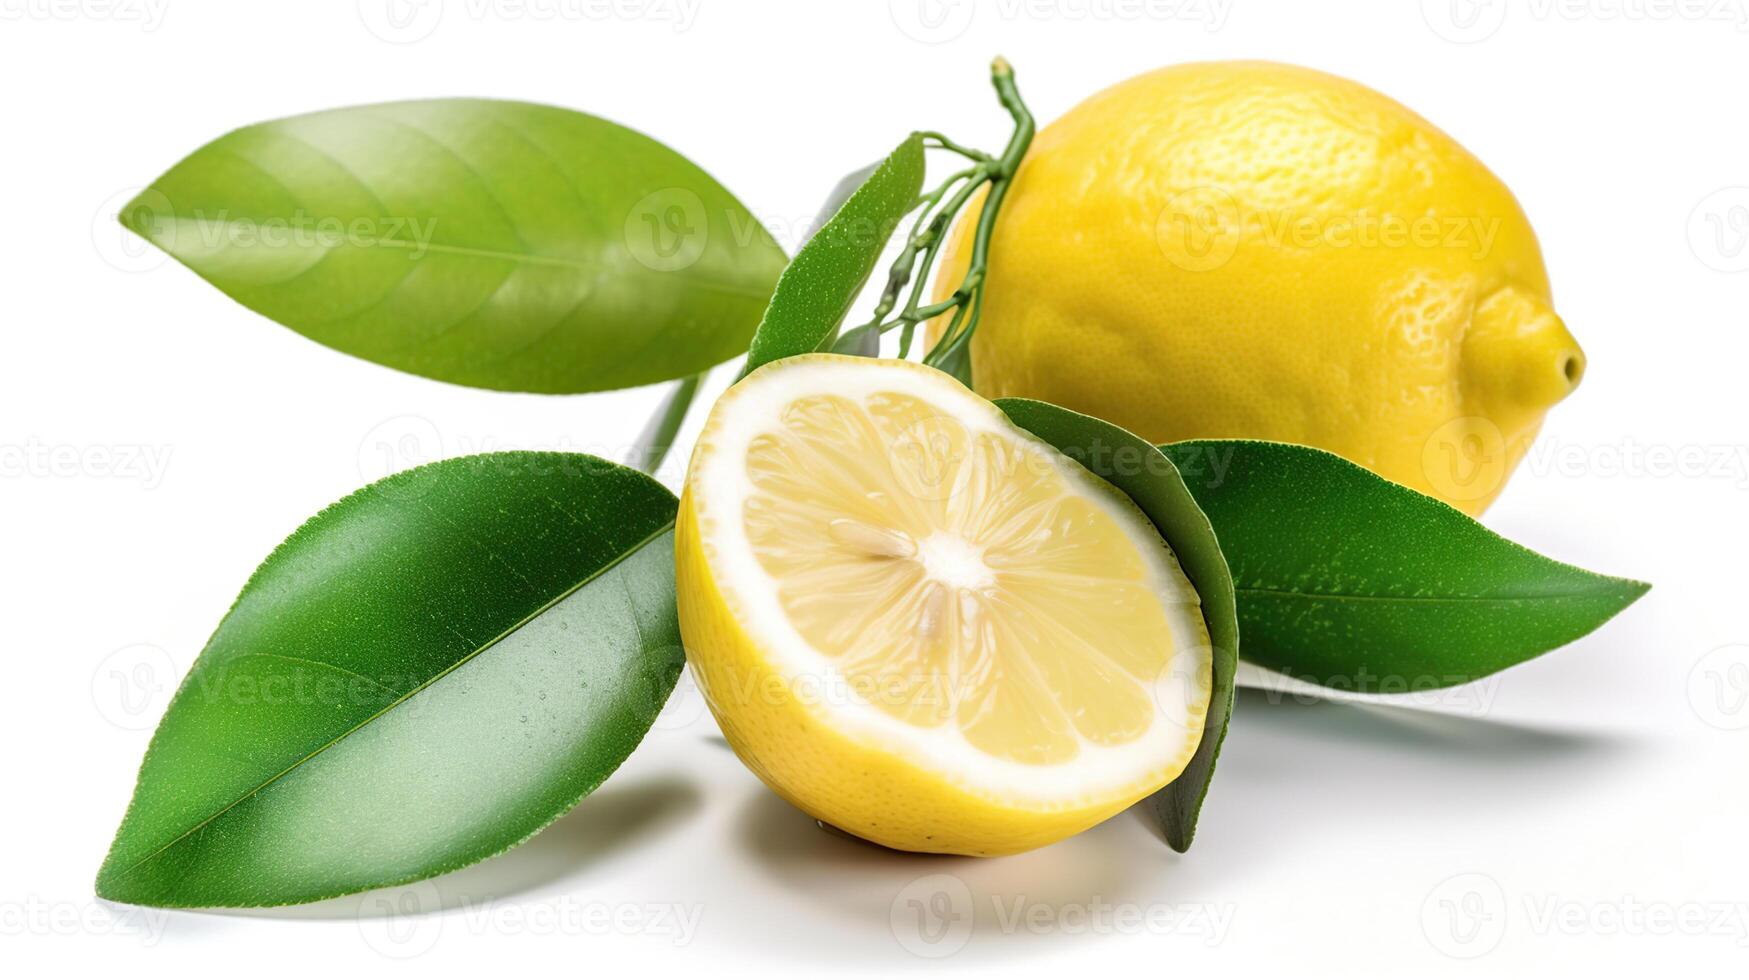 Lemon fruit with leaf isolate. Lemon whole, half, slice, leaves on white. Lemon slices with zest isolated. With clipping path. photo